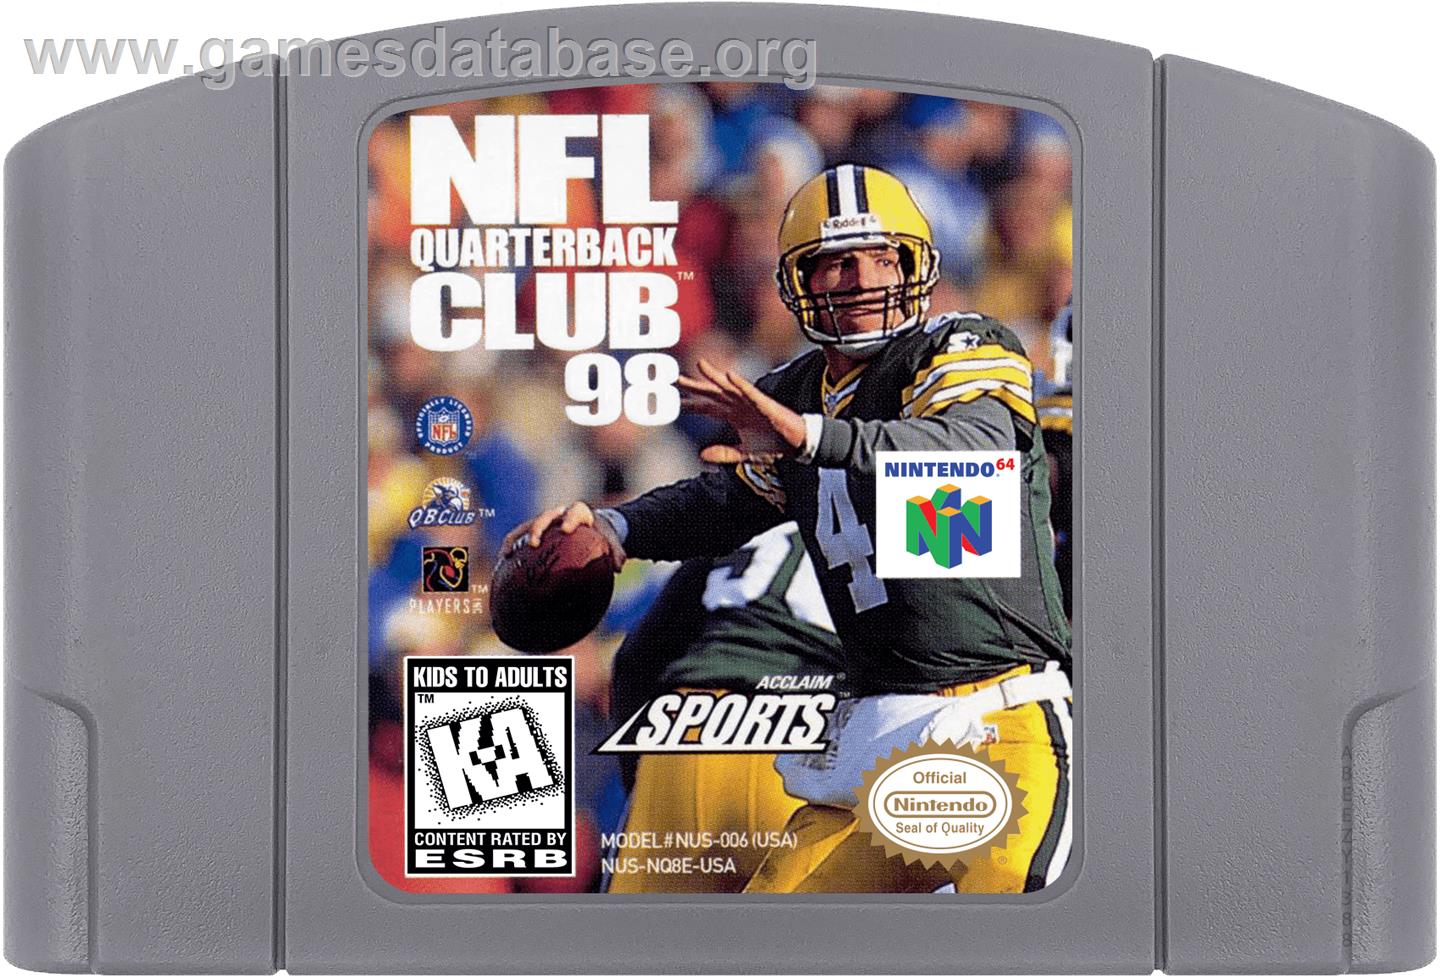 NFL Quarterback Club '98 - Nintendo N64 - Artwork - Cartridge